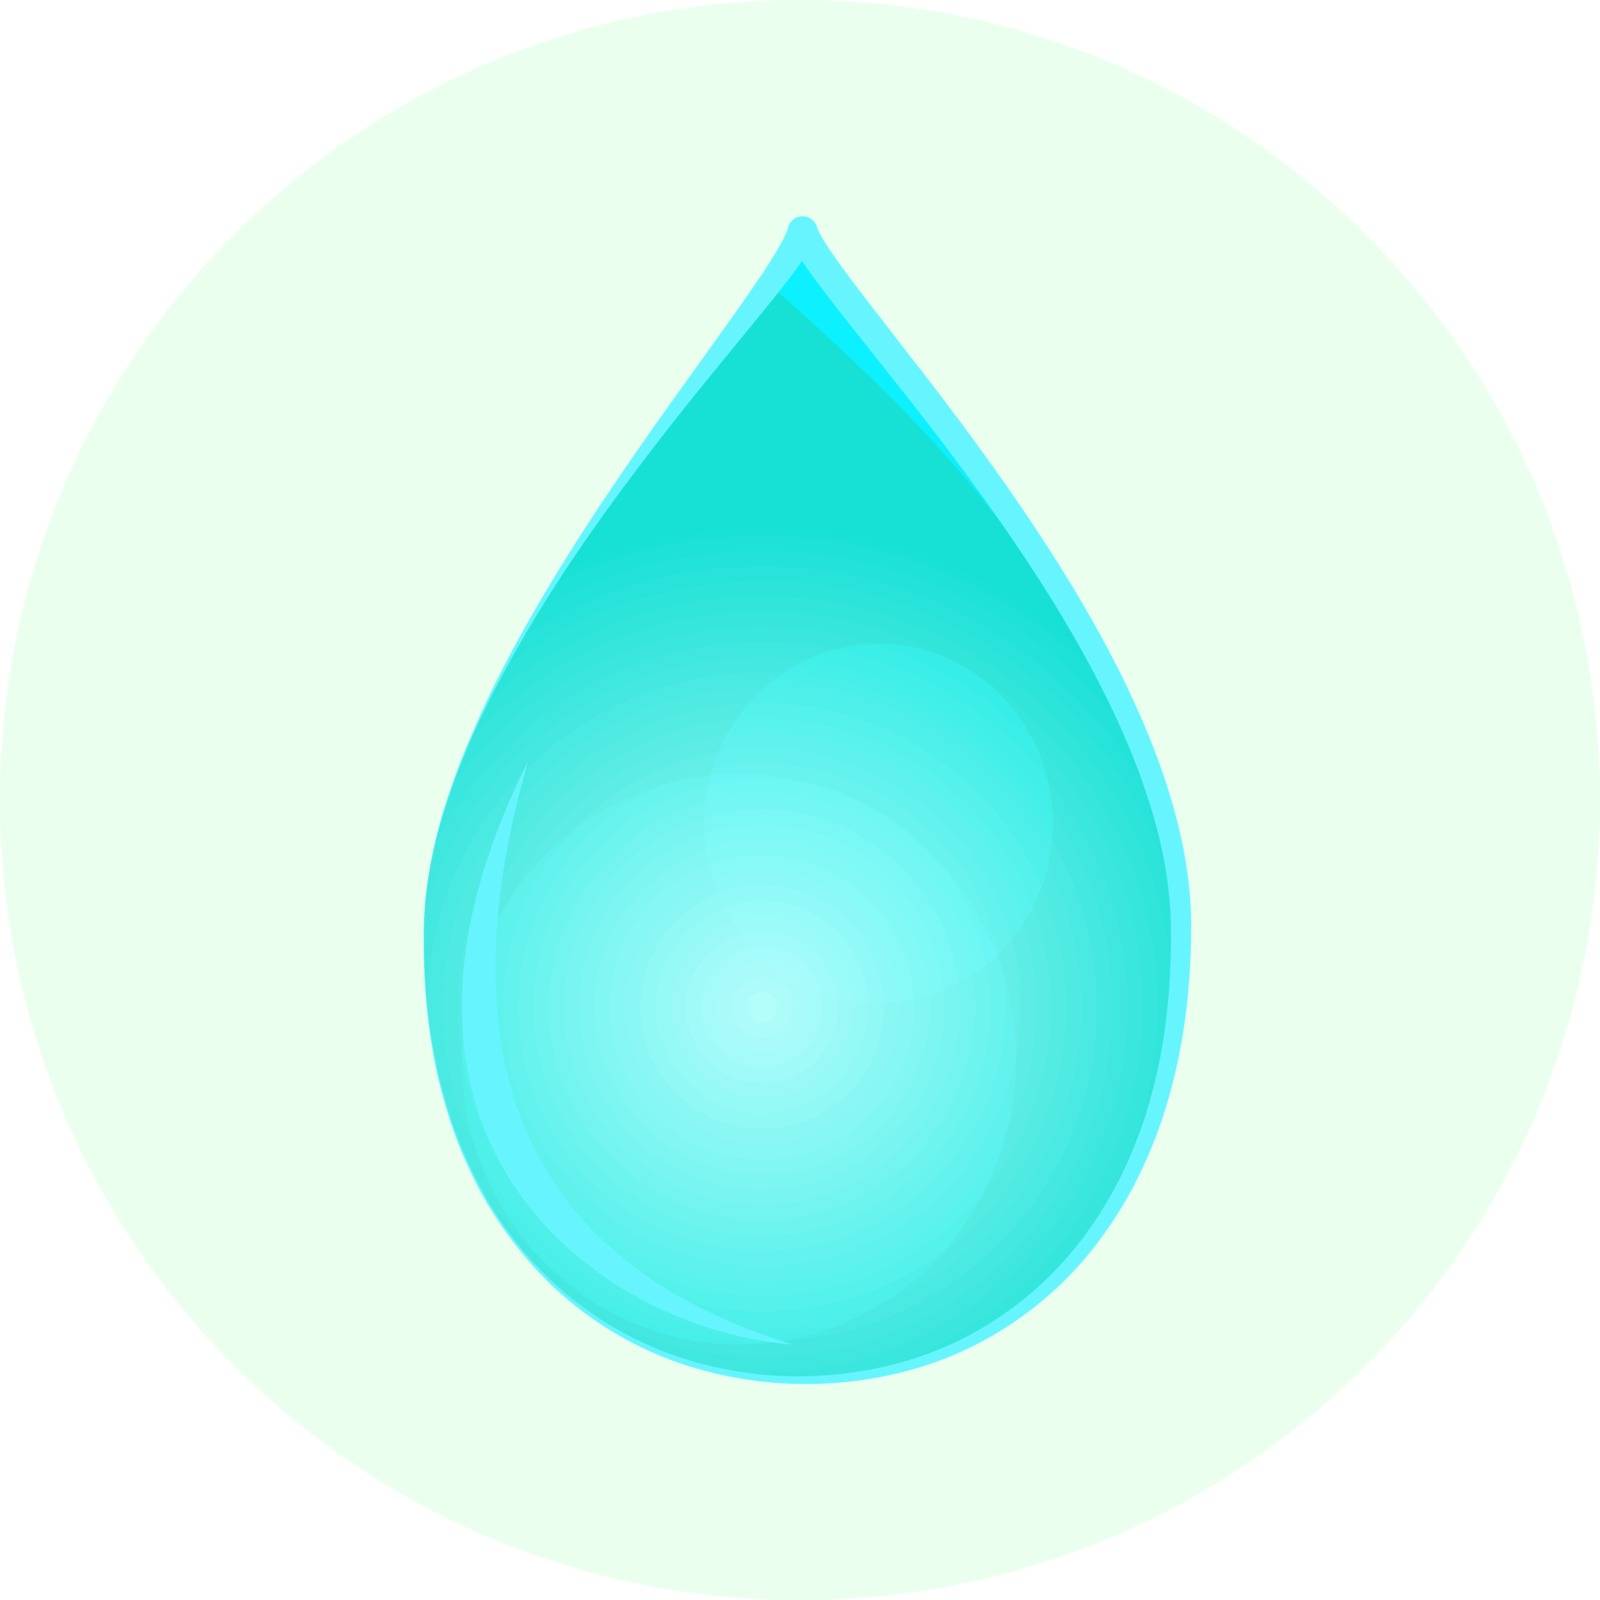 blue water drop icon by tatahnka